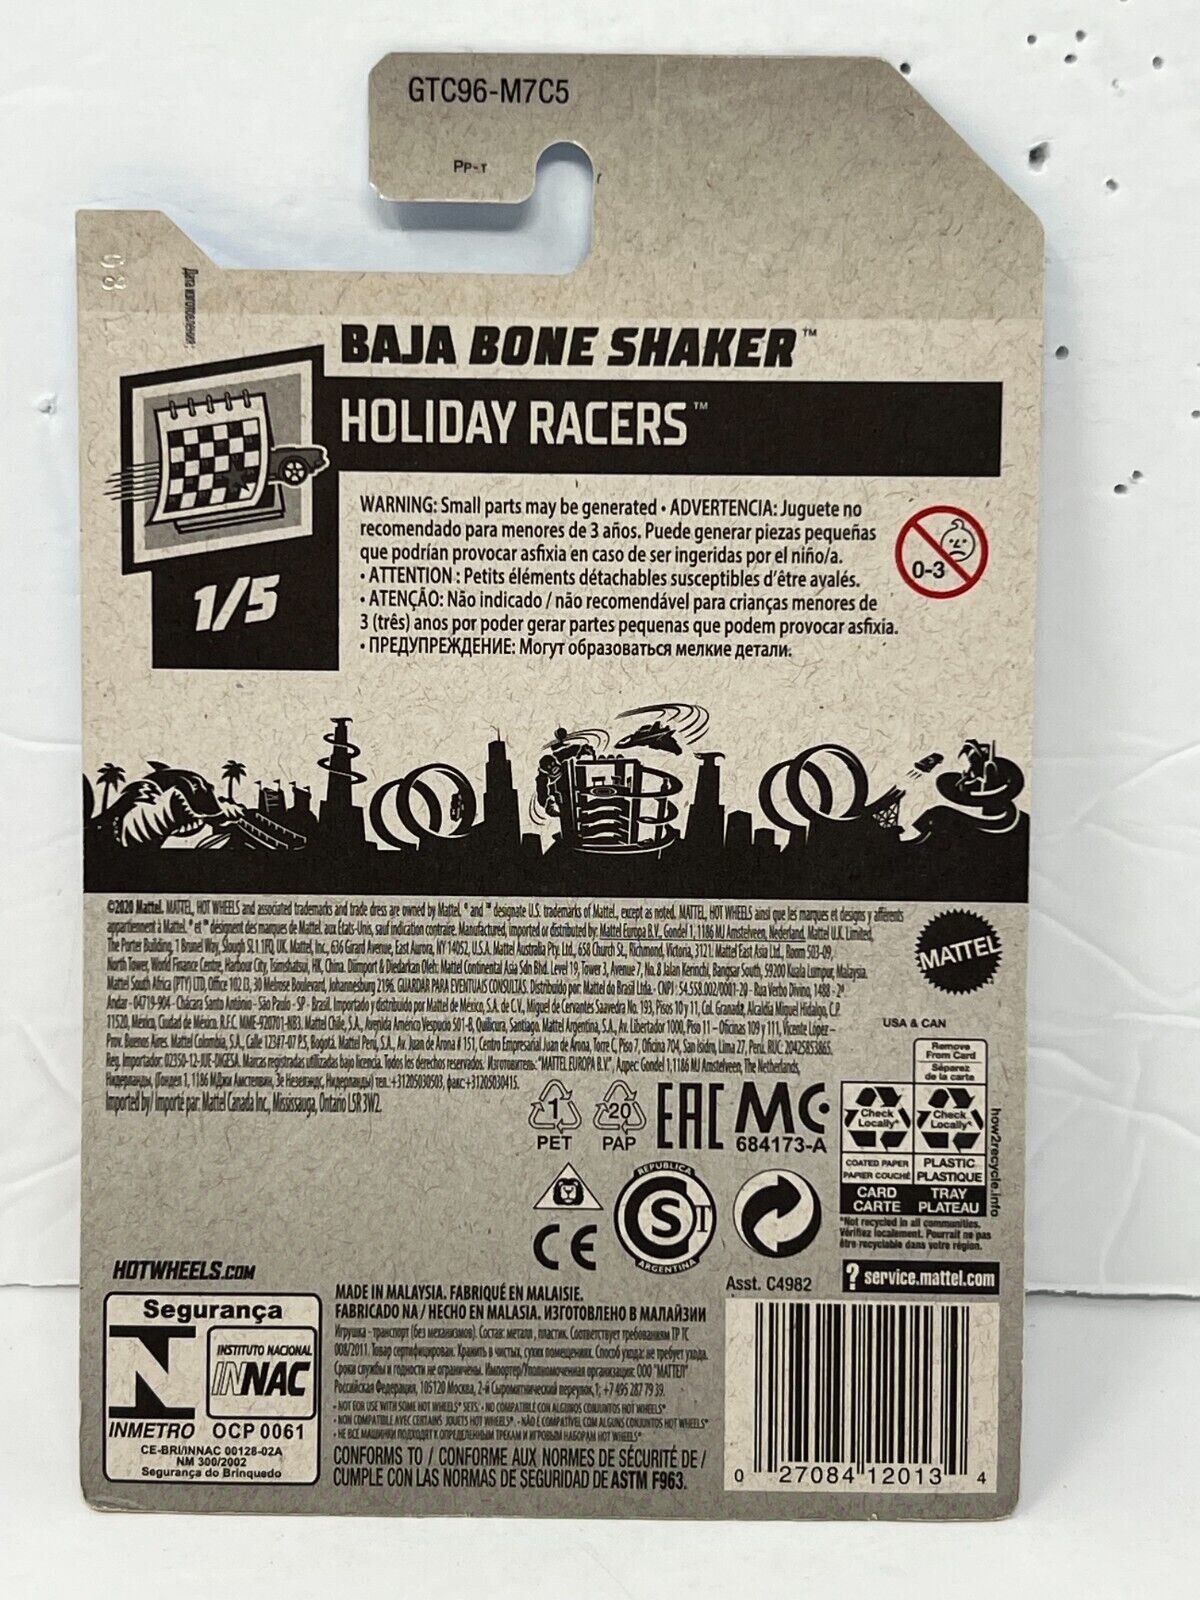 Hot Wheels Treasure Hunt Holiday Racers Baja Bone Shaker 1:64 Diecast